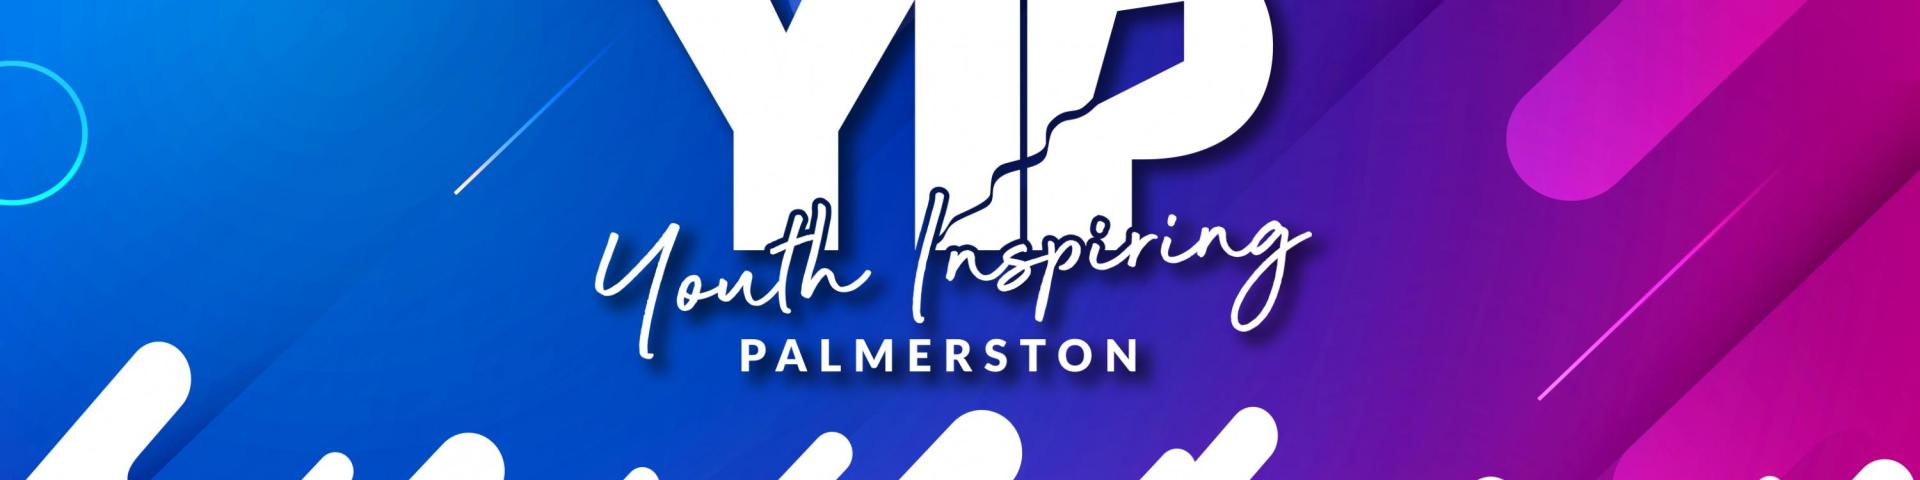 Youth Inspiring Palmerston